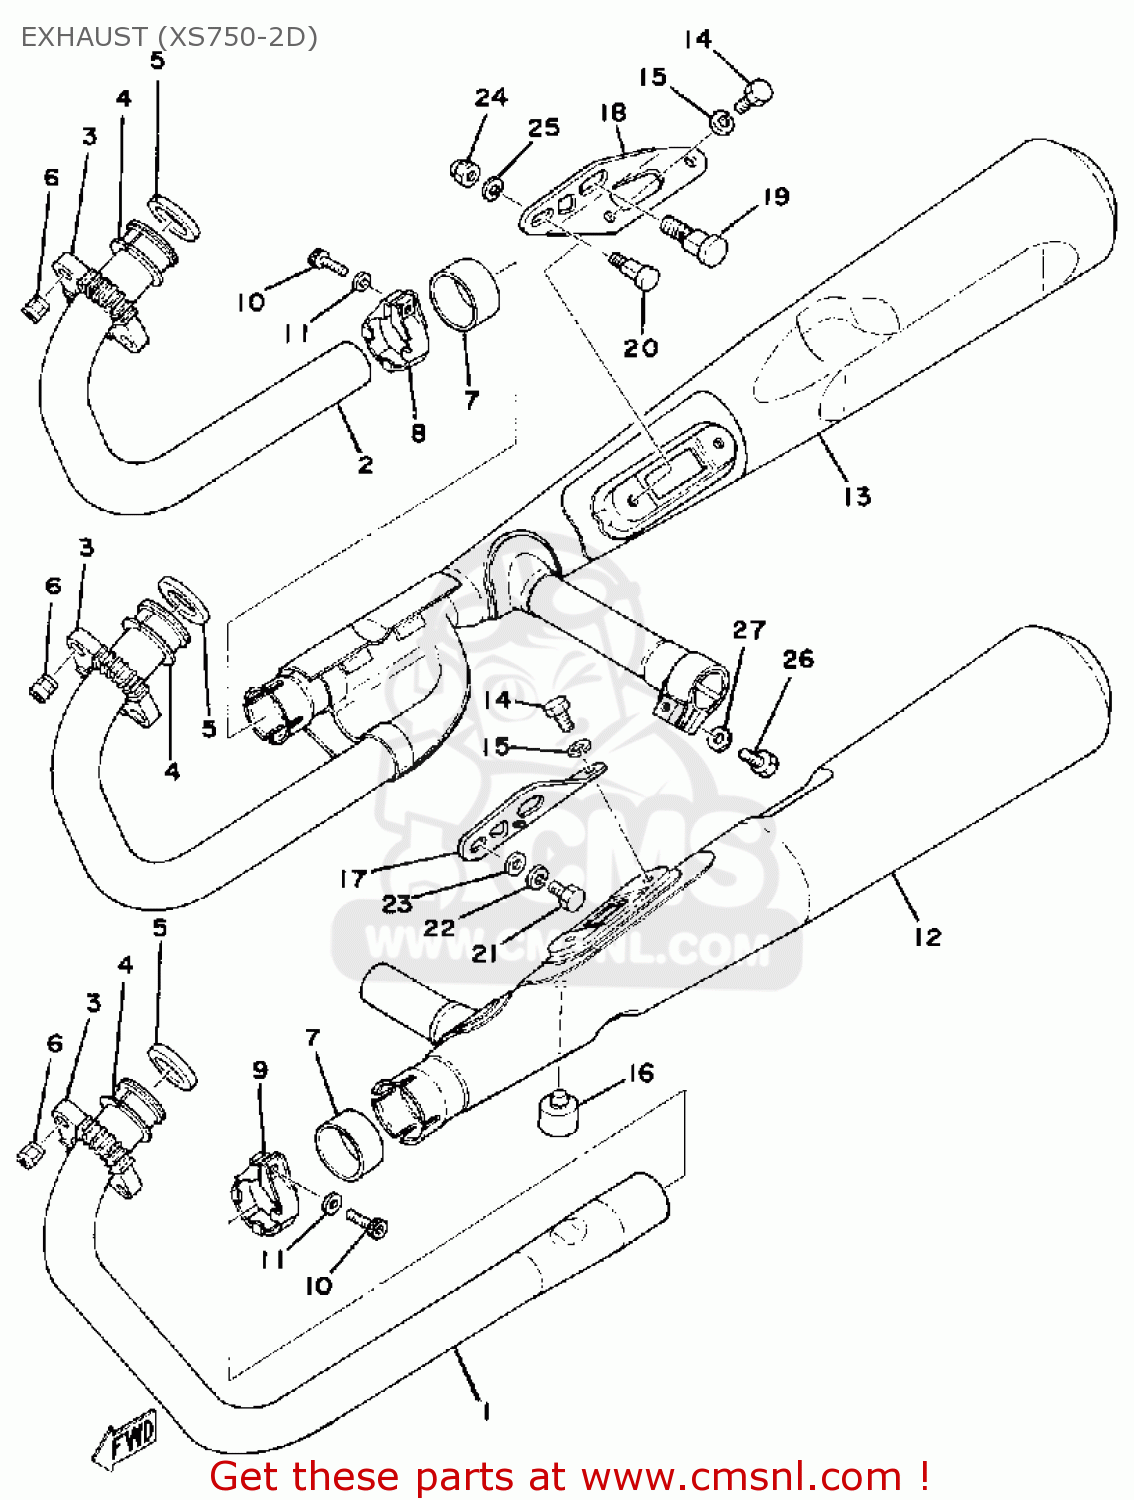 fj1100 wiring diagram